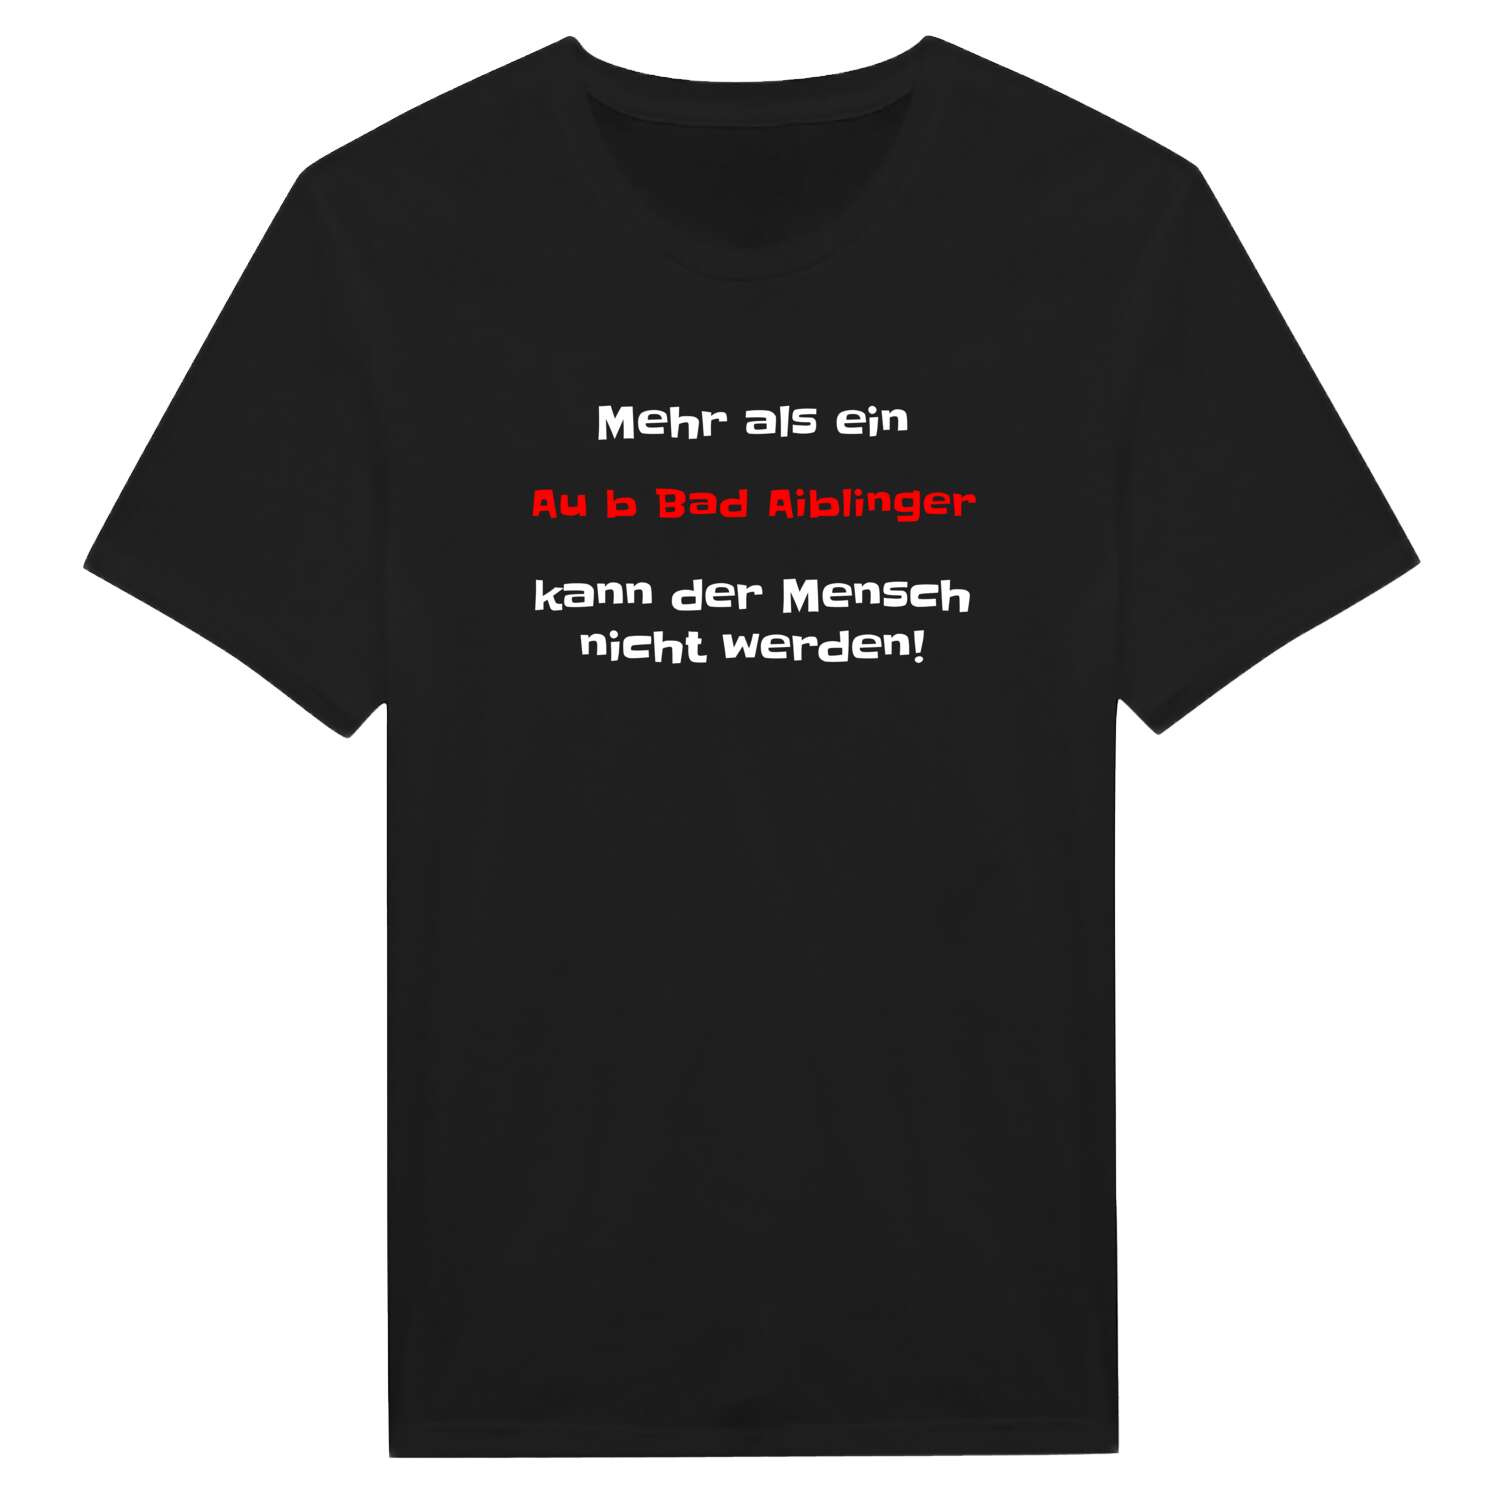 Au b Bad Aibling T-Shirt »Mehr als ein«